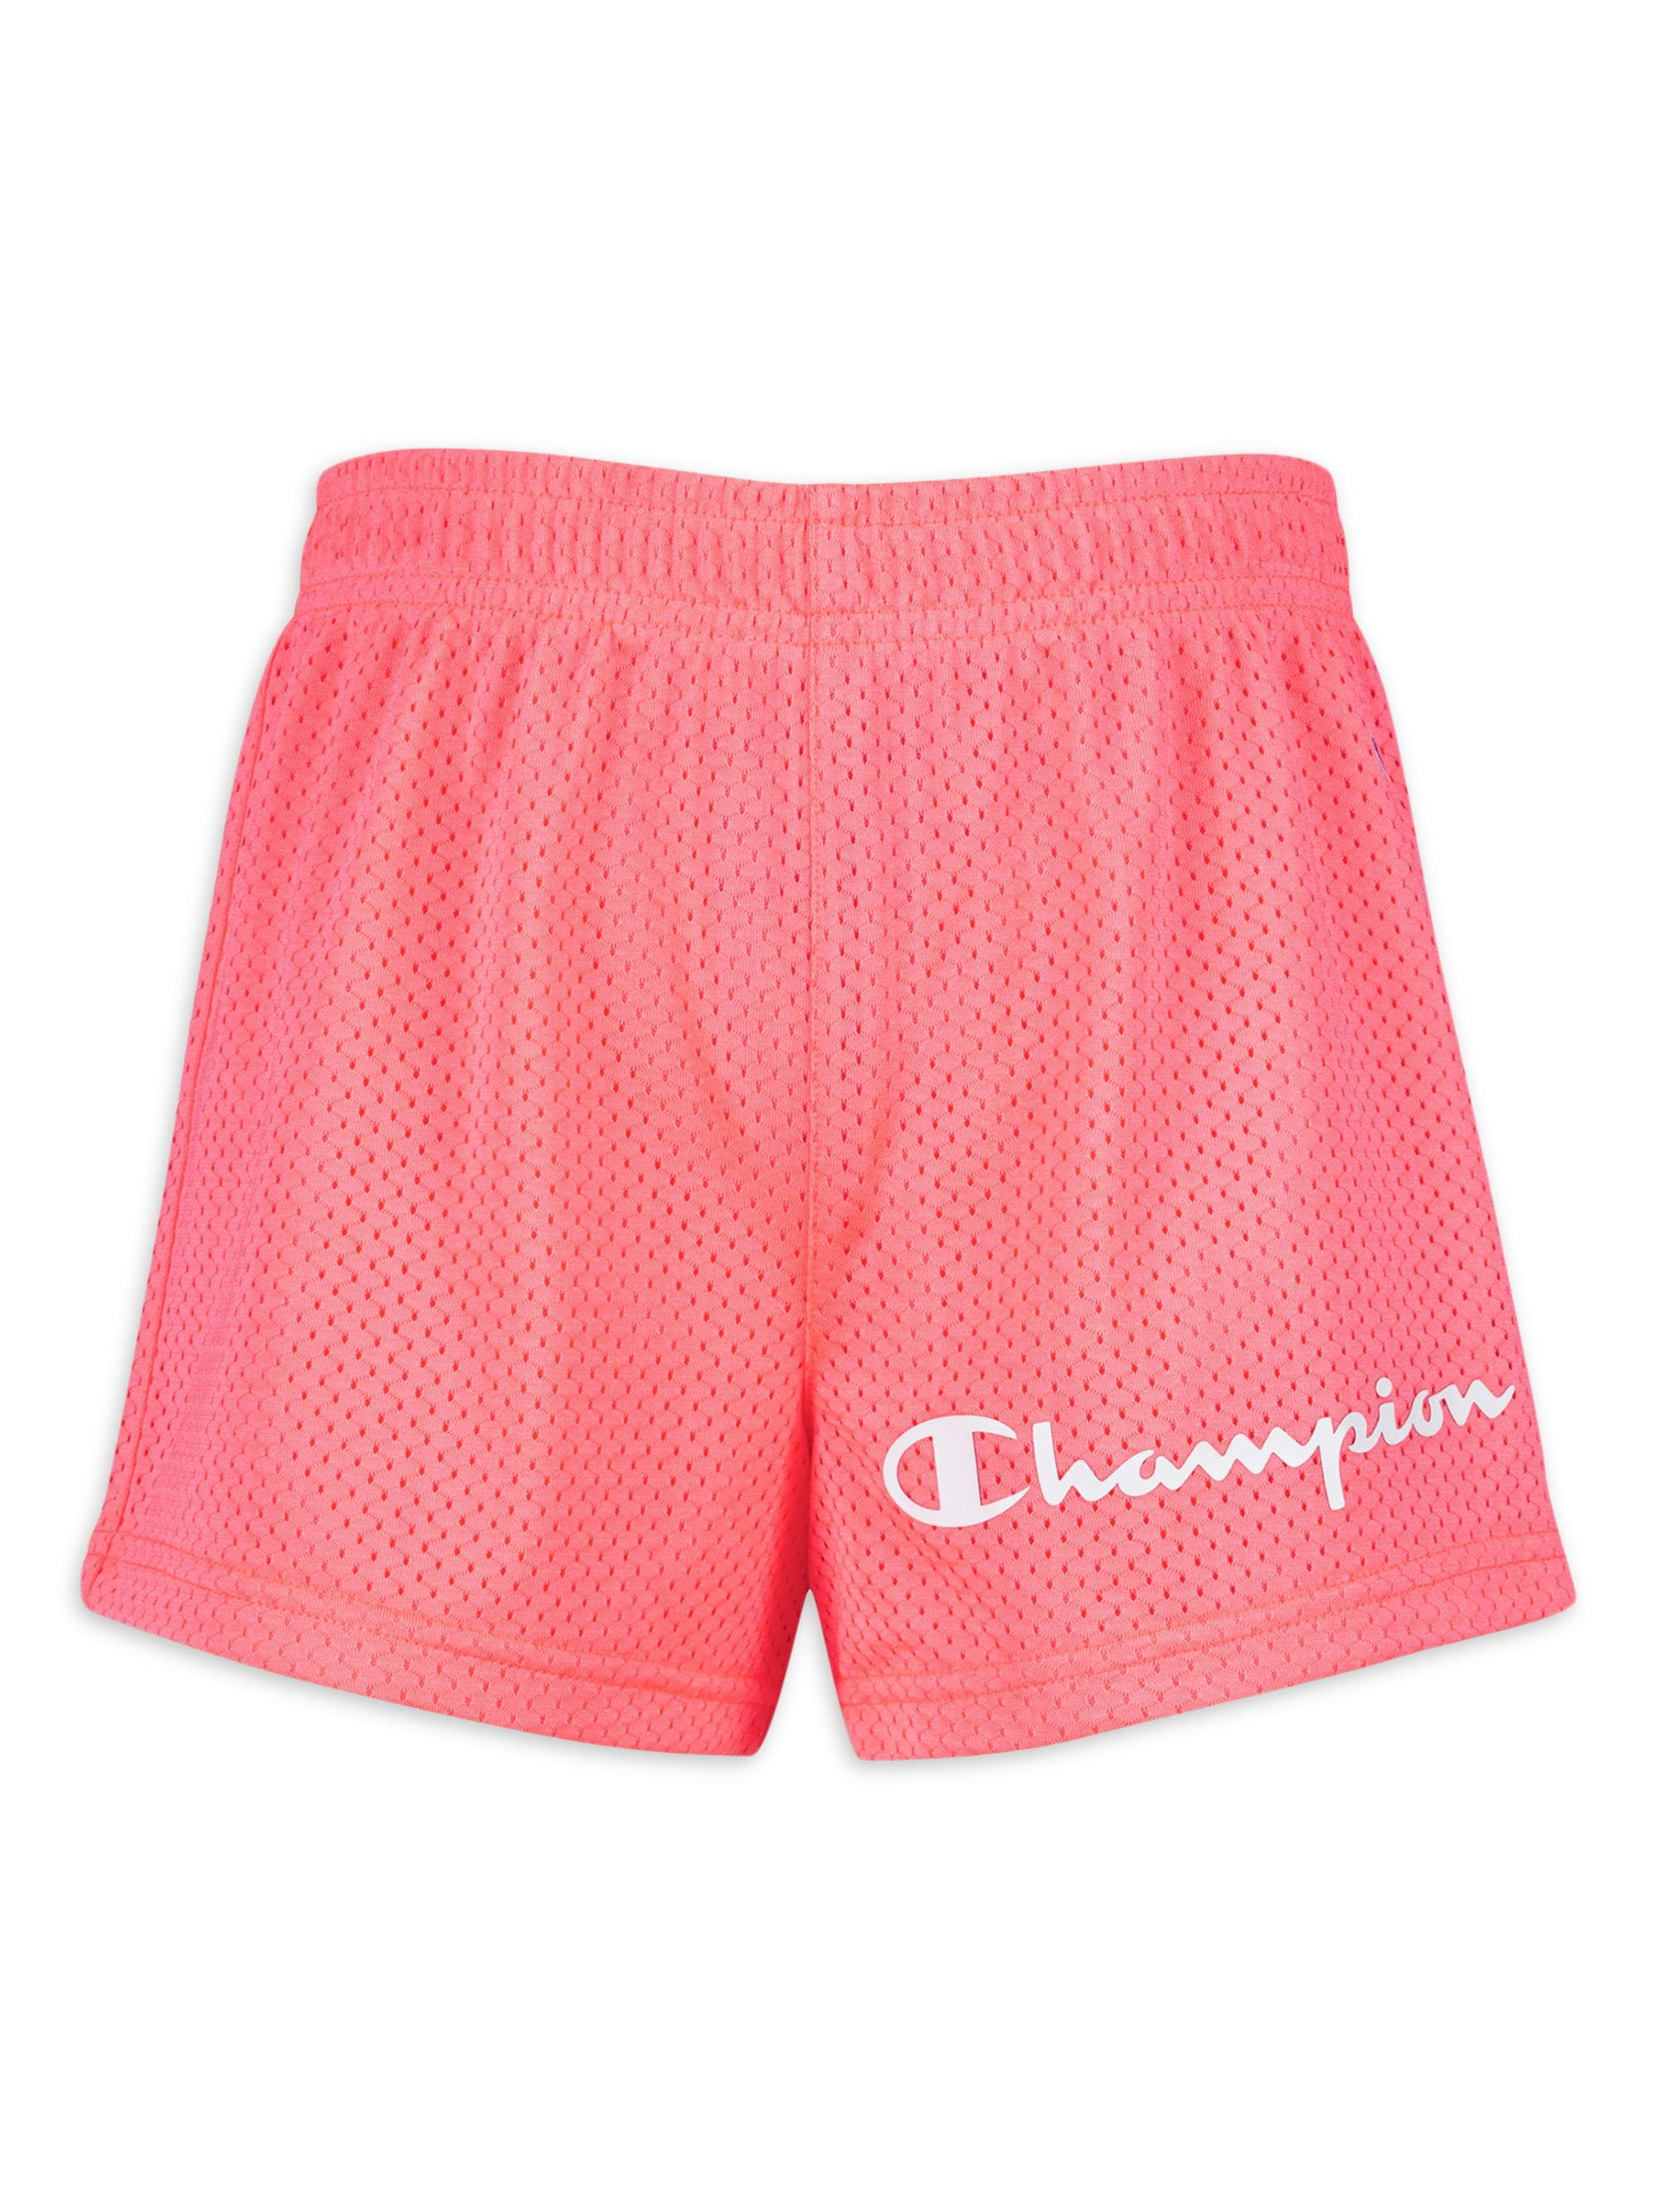 Champion Girls Varsity Mesh Shorts, Sizes 7-16 - Walmart.com